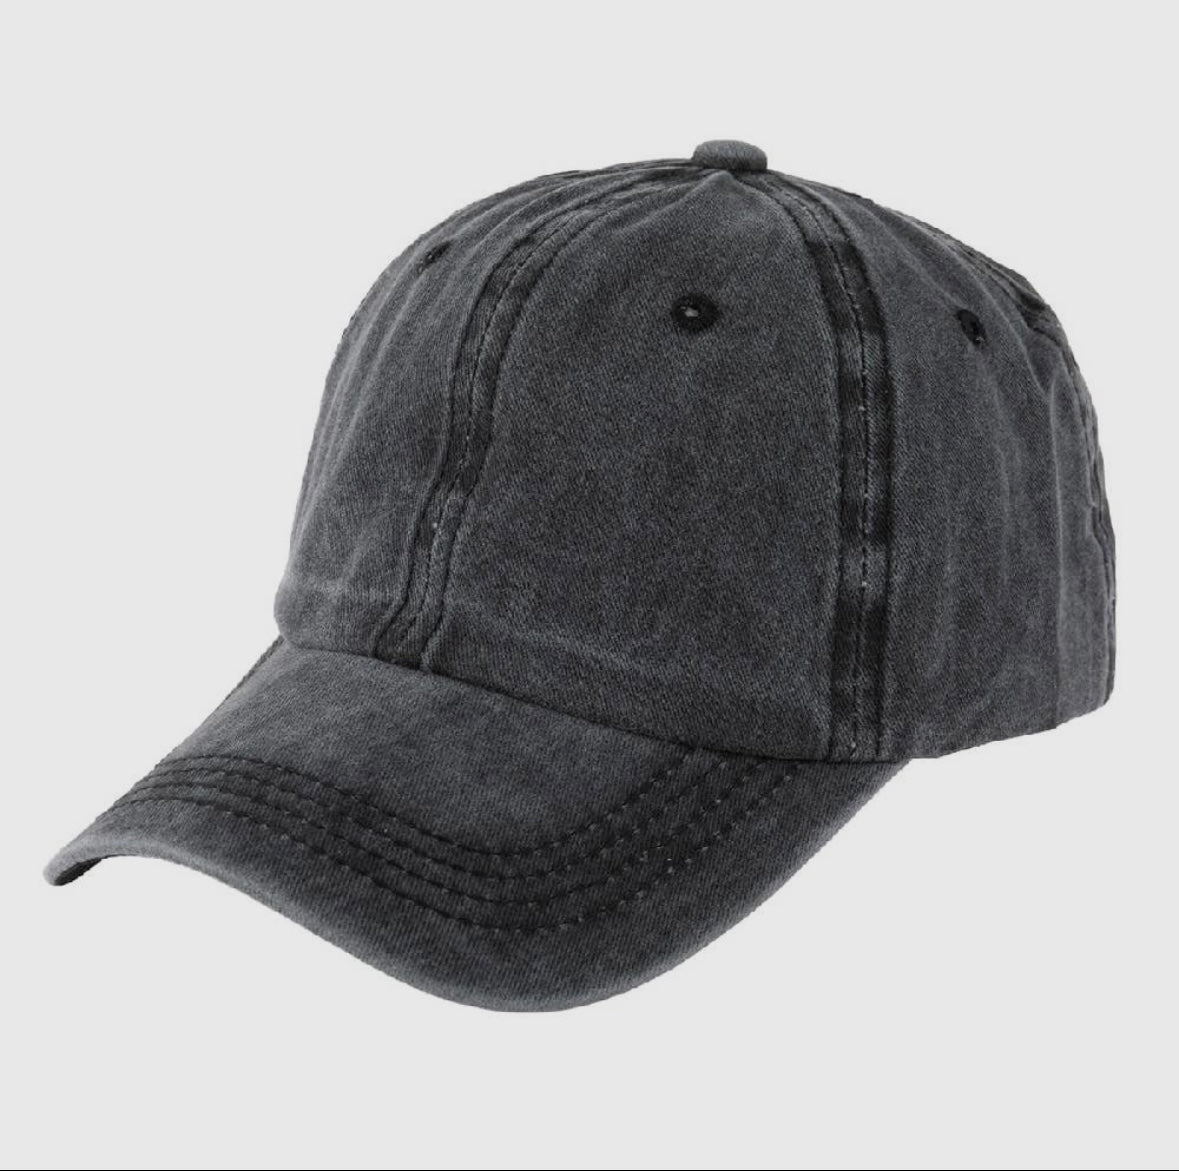 Plain ball caps/ hat